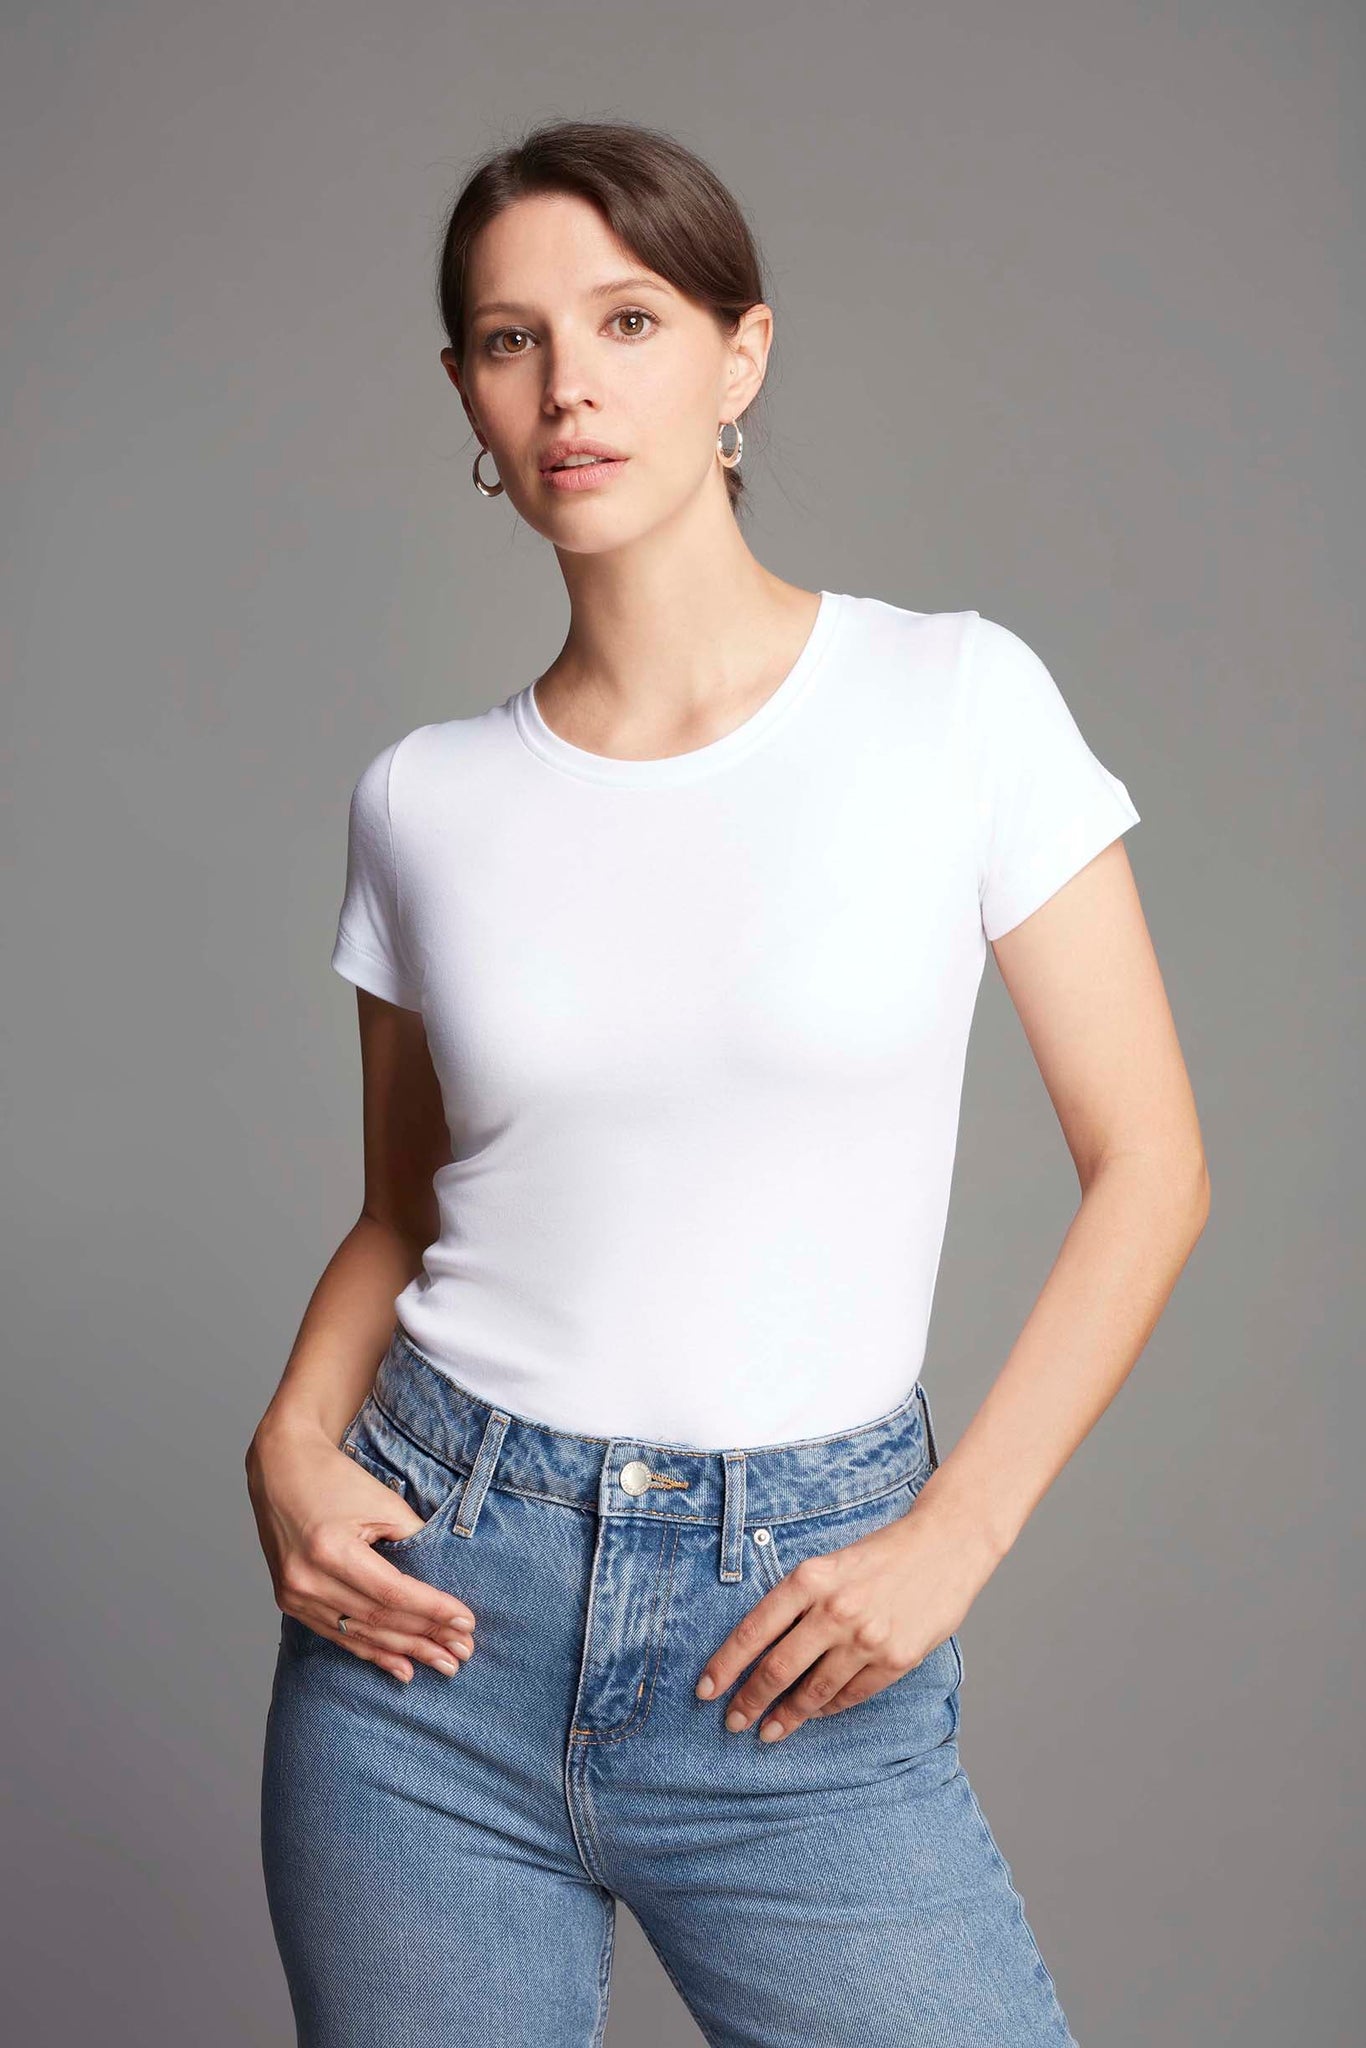 Cathalem Women's Softstyle Cotton T-Shirt Short Sleeve Crew Neck